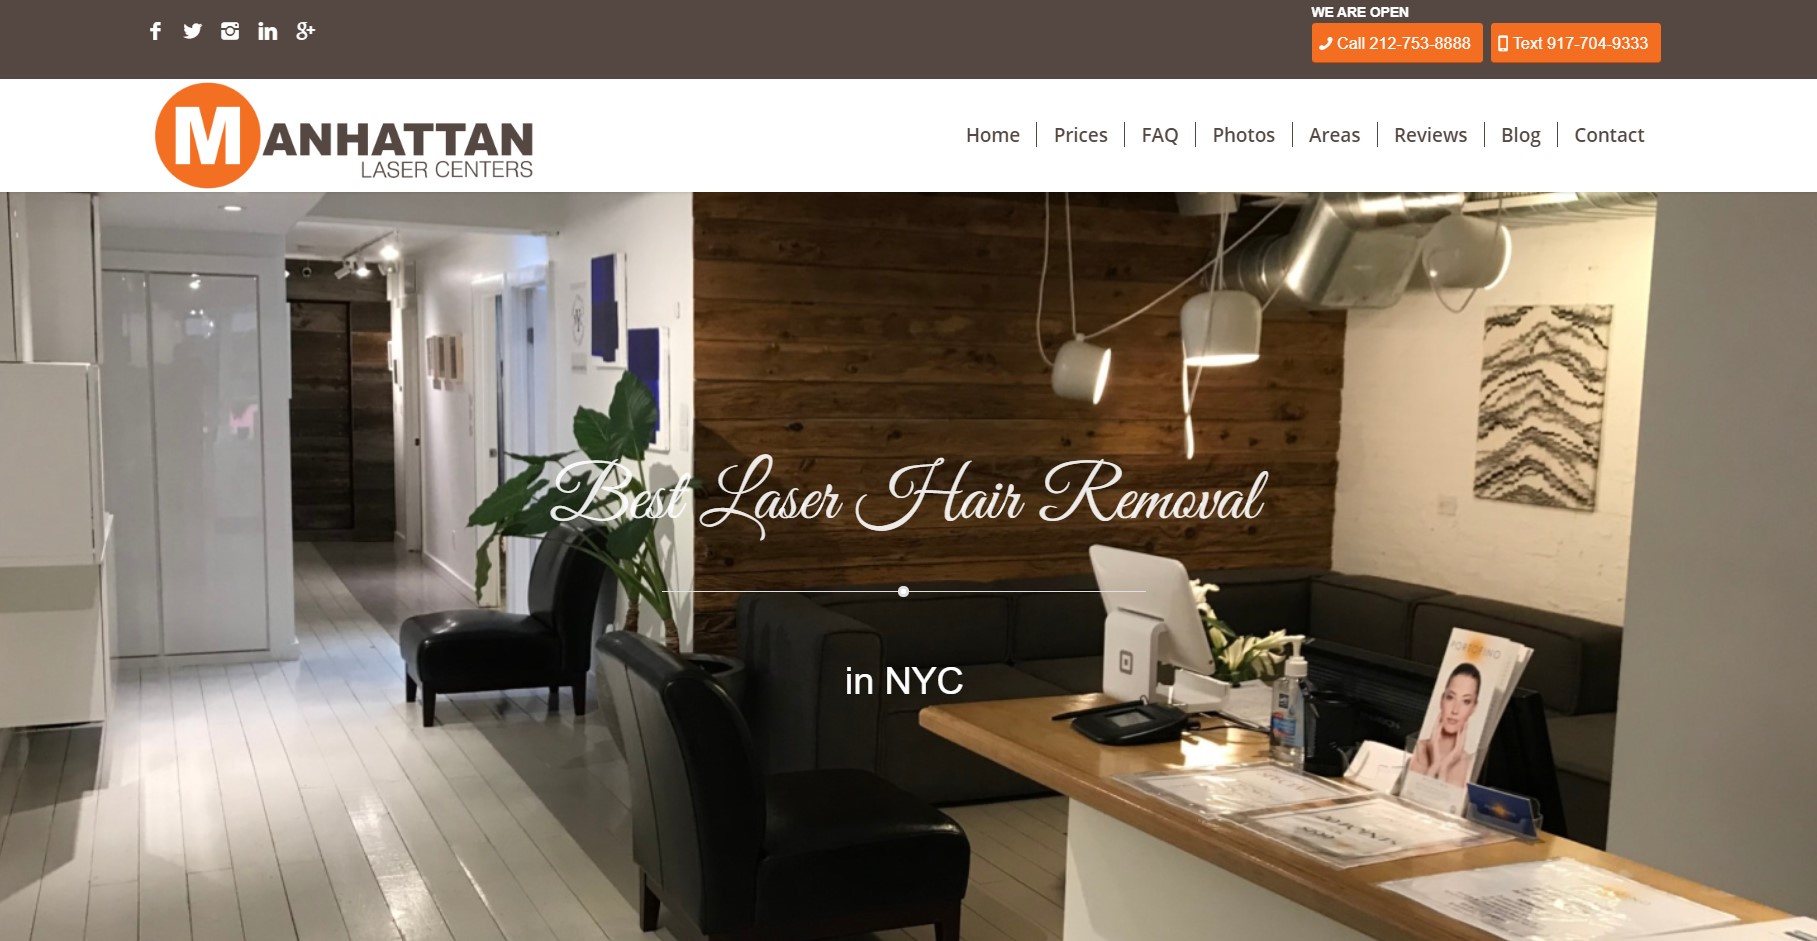 manhattan laser hair removal clinic in new york